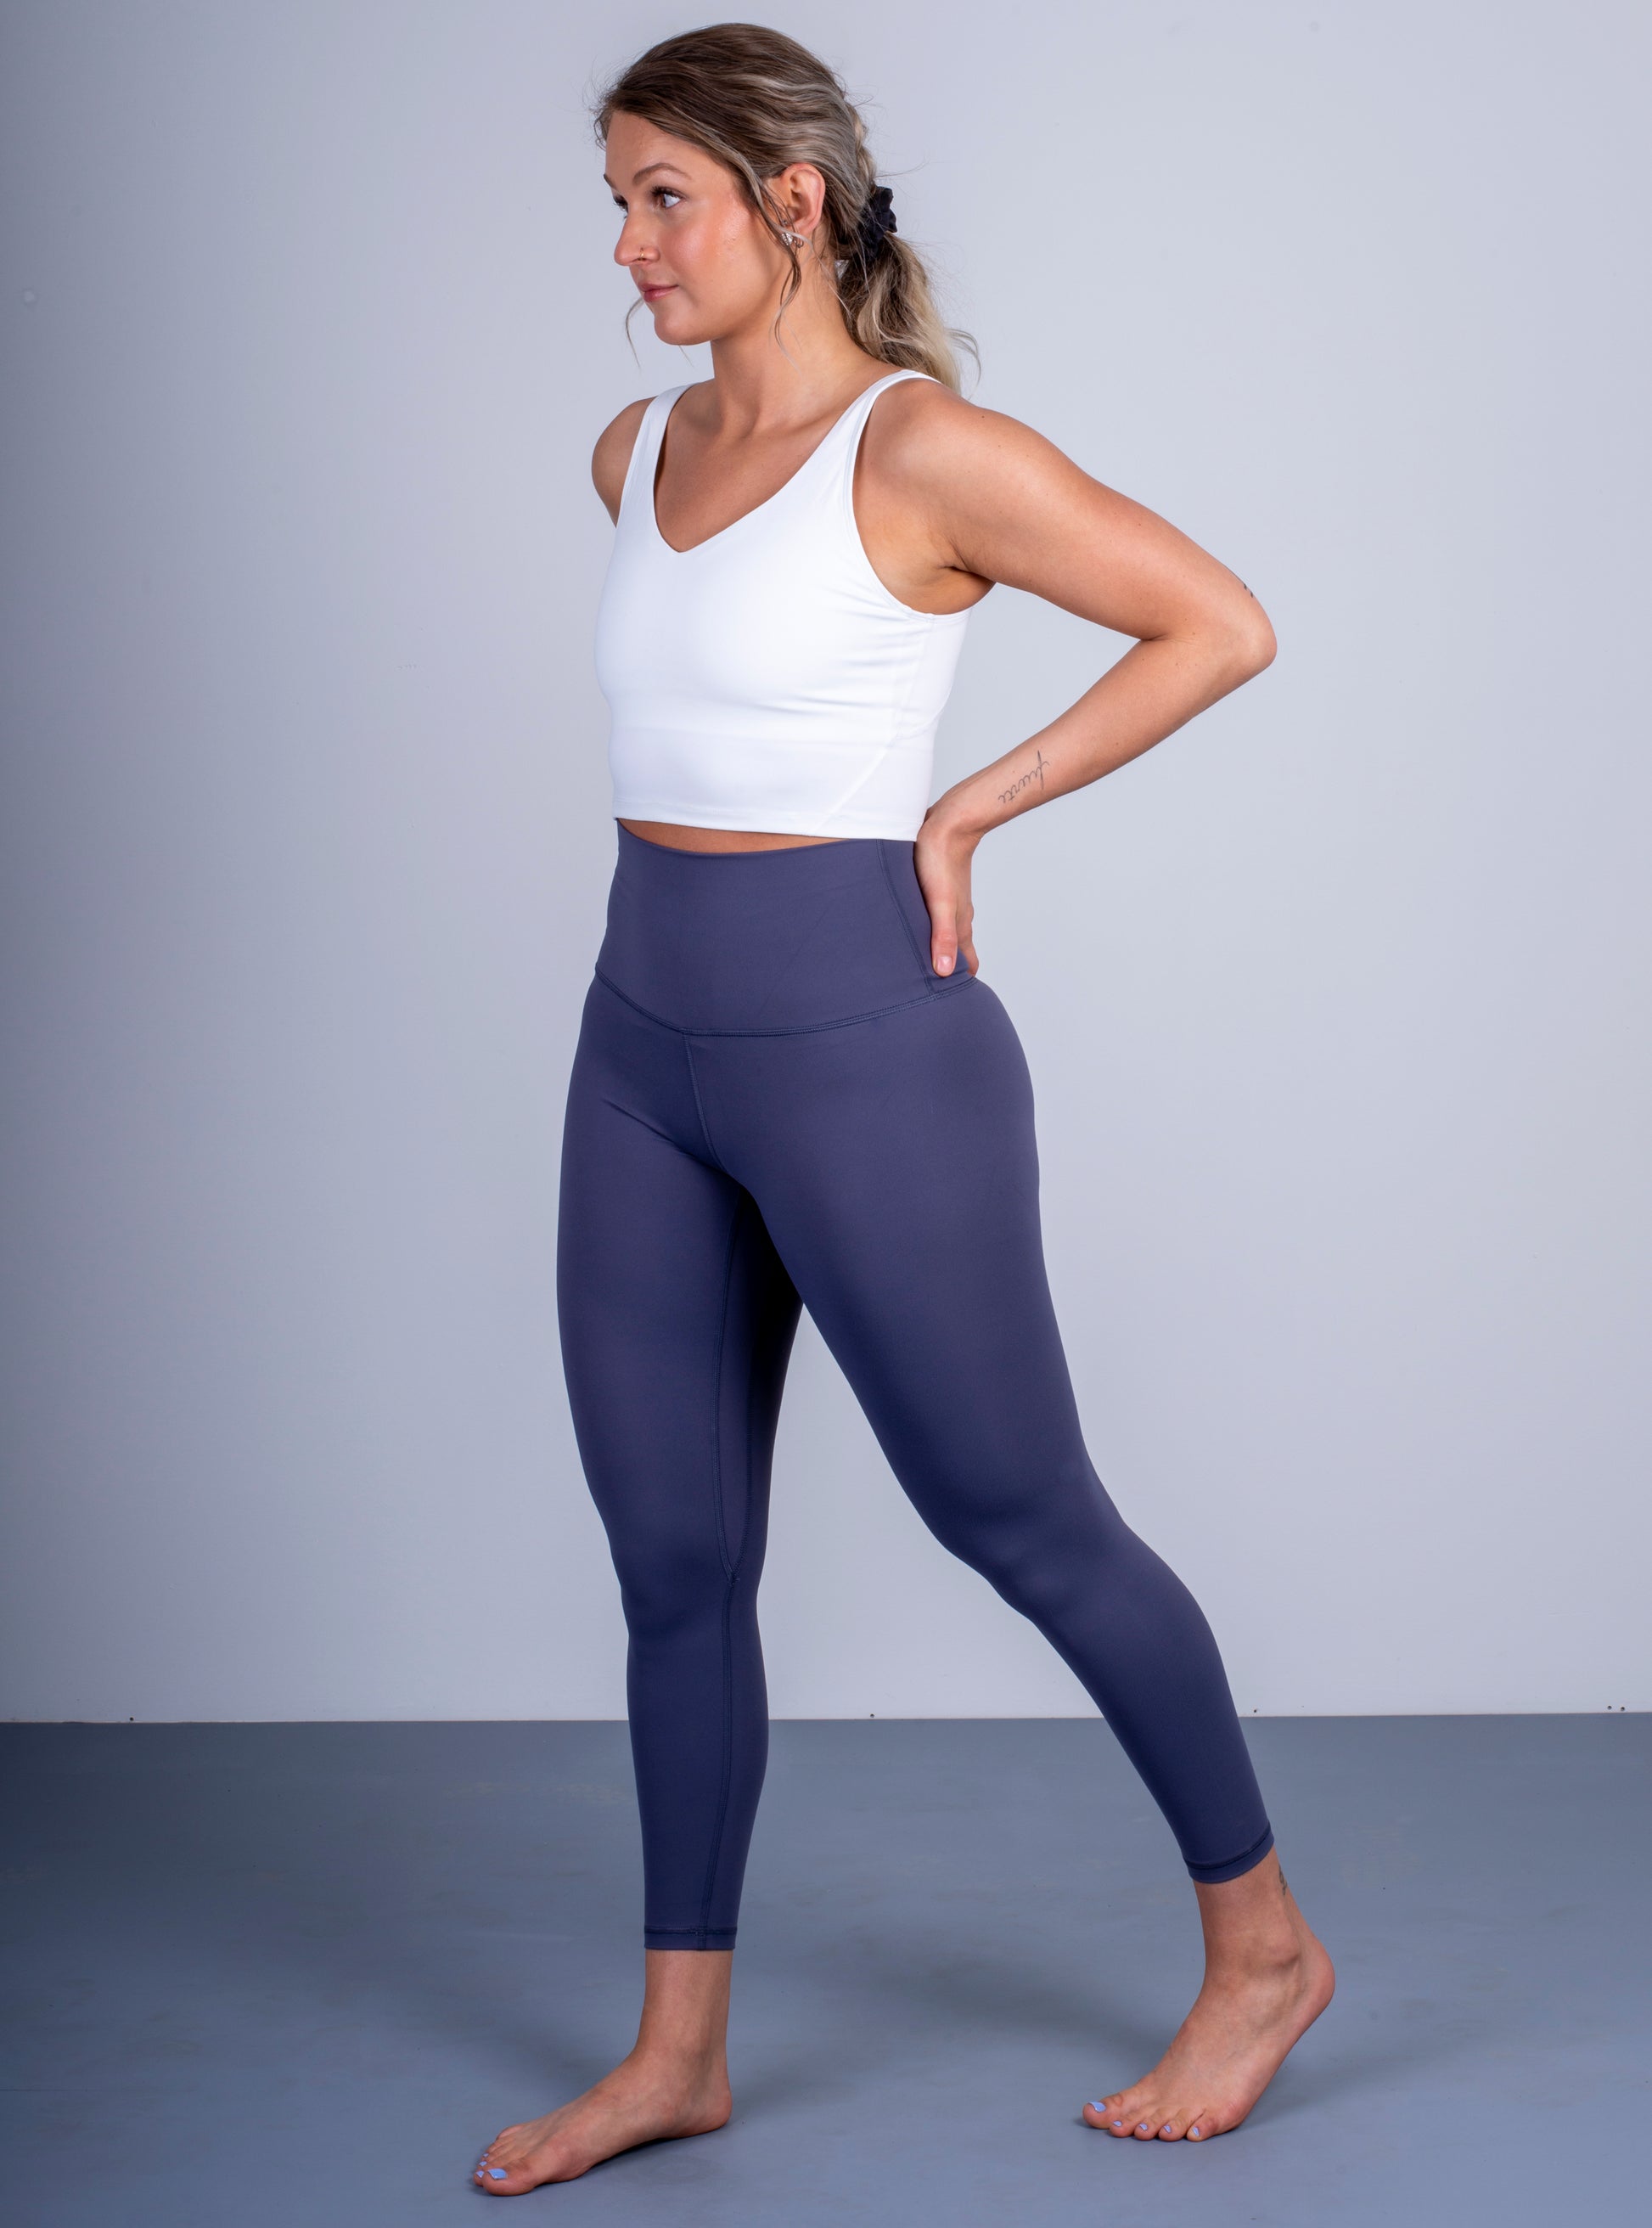 Buy Vanoluya Women's Workout Crop Top Seamless Athletic Yoga Short